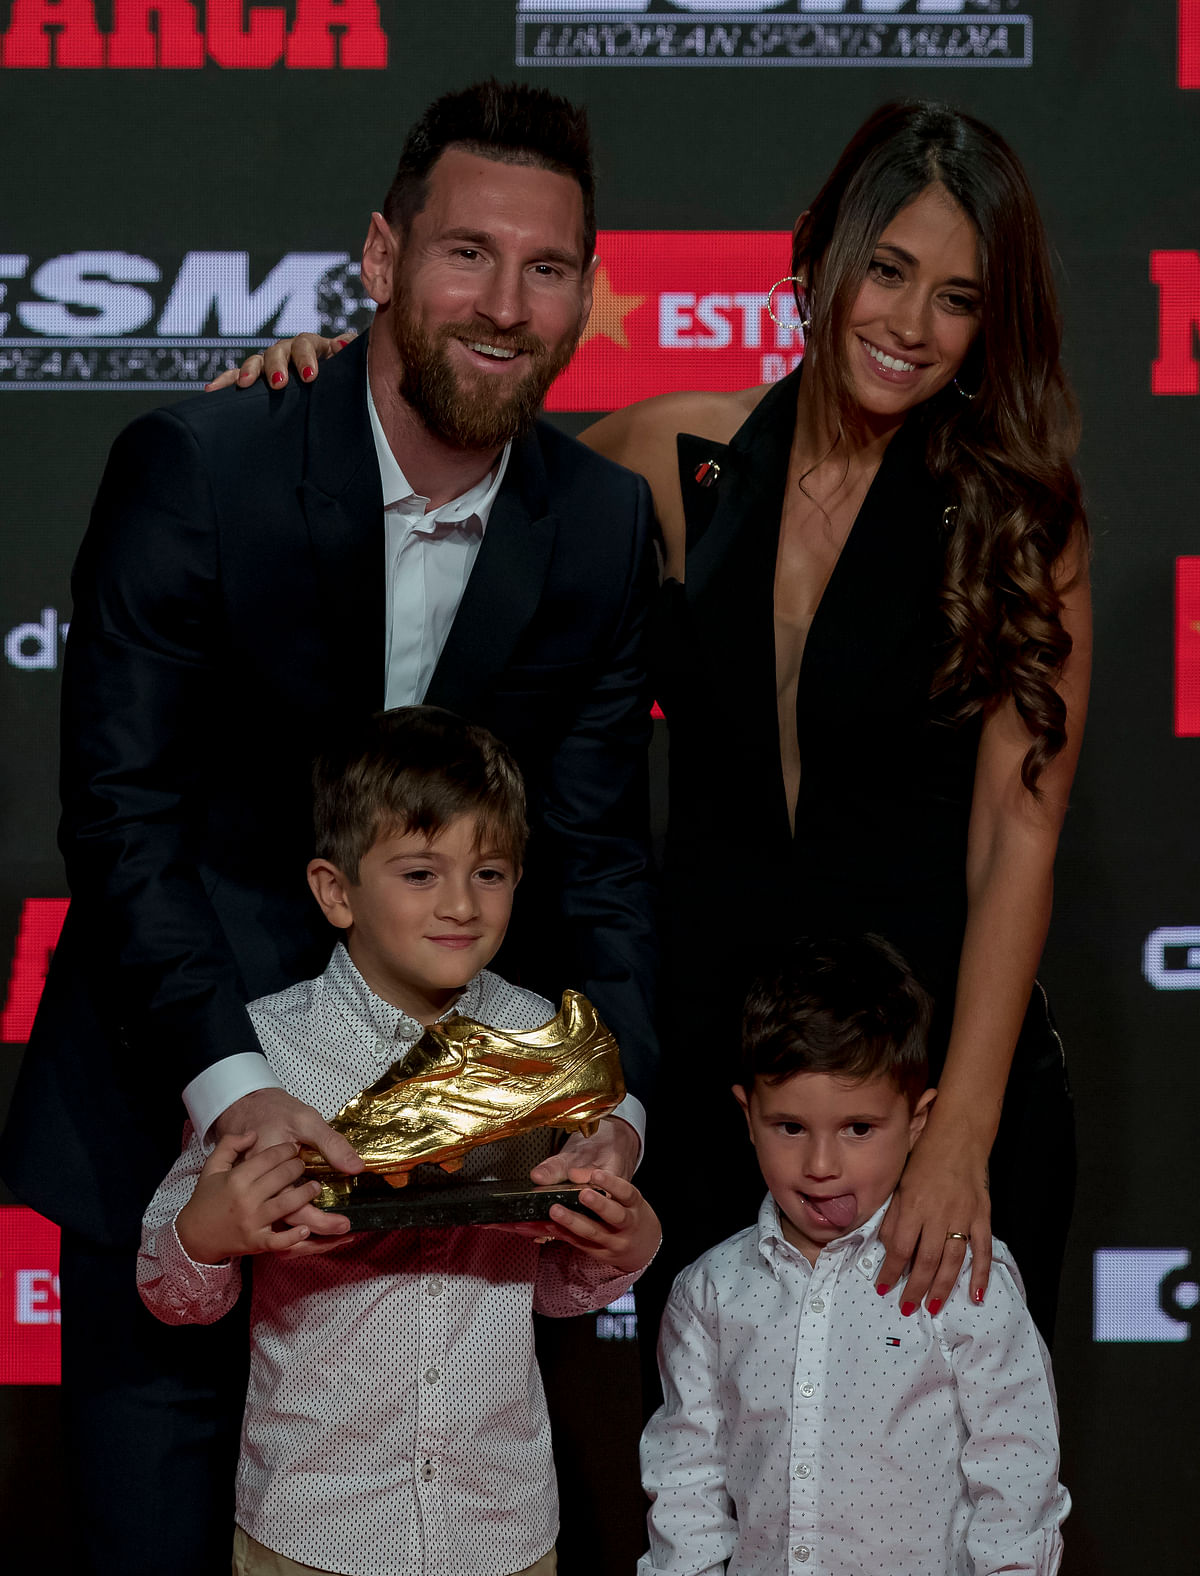 Lionel Messi has won the 2018/19 European Golden Shoe award.